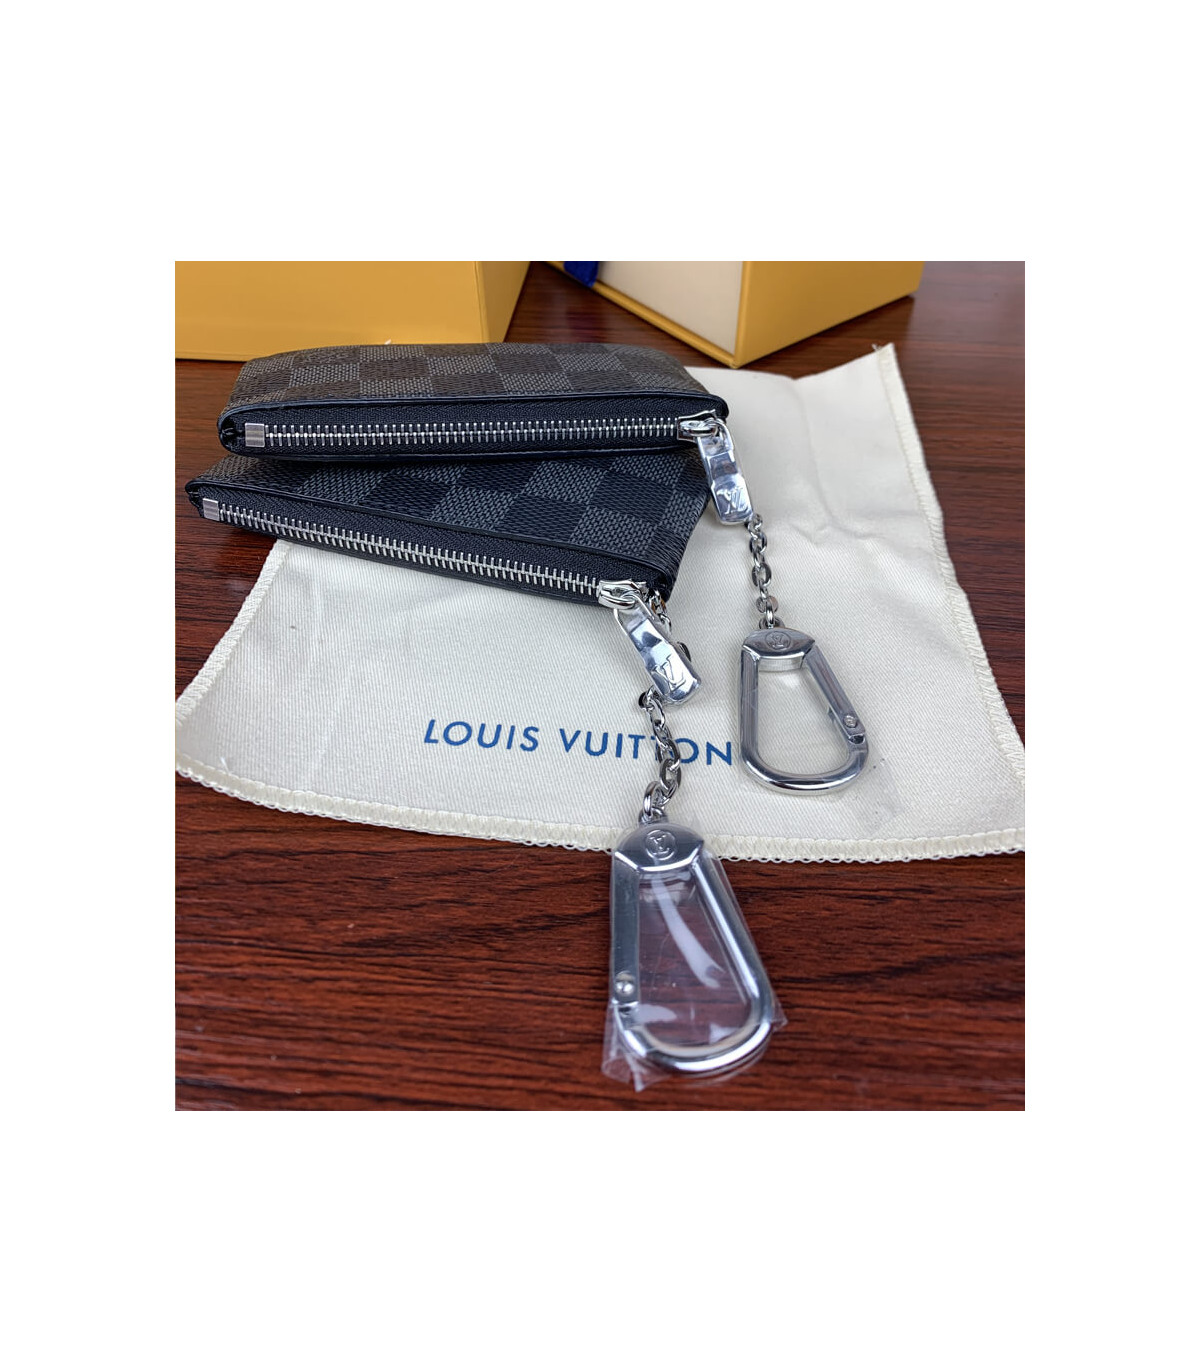 LOUIS VUITTON Key Pouch Damier Graphite N60155 Used Japan